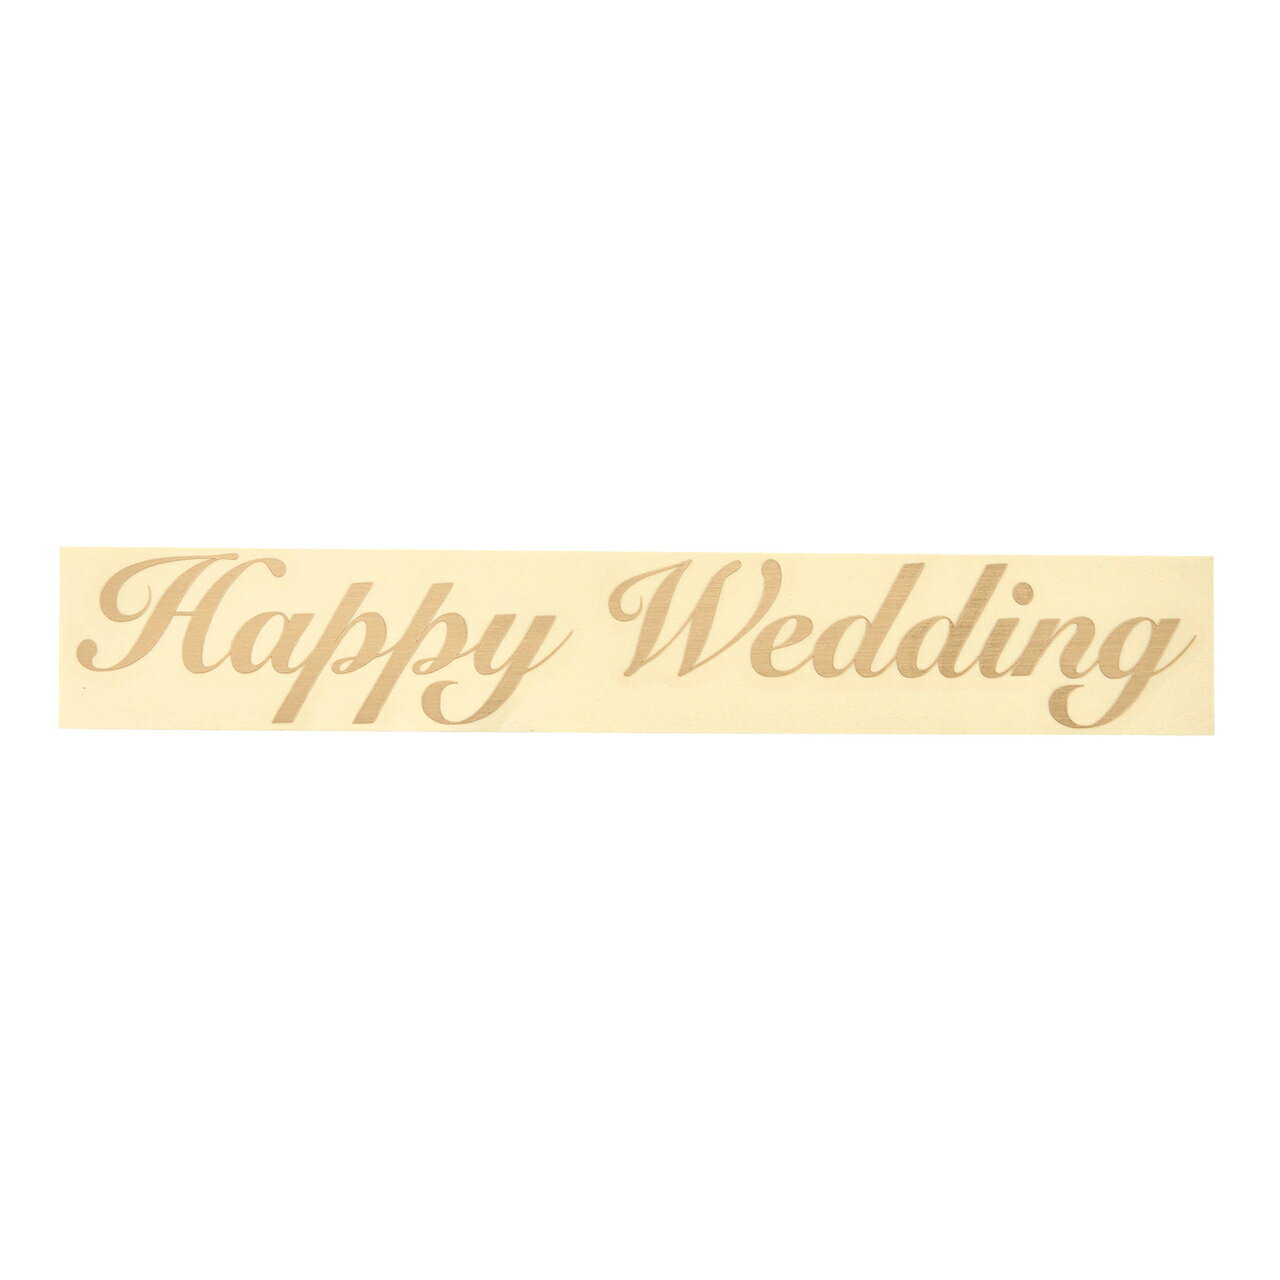 PFバルーン用転写シール Happy Wedding/GI000282【01】【取寄】 花資材・フローリスト道具 デコレーションパーツ・素材 バルーンフラワー 材料